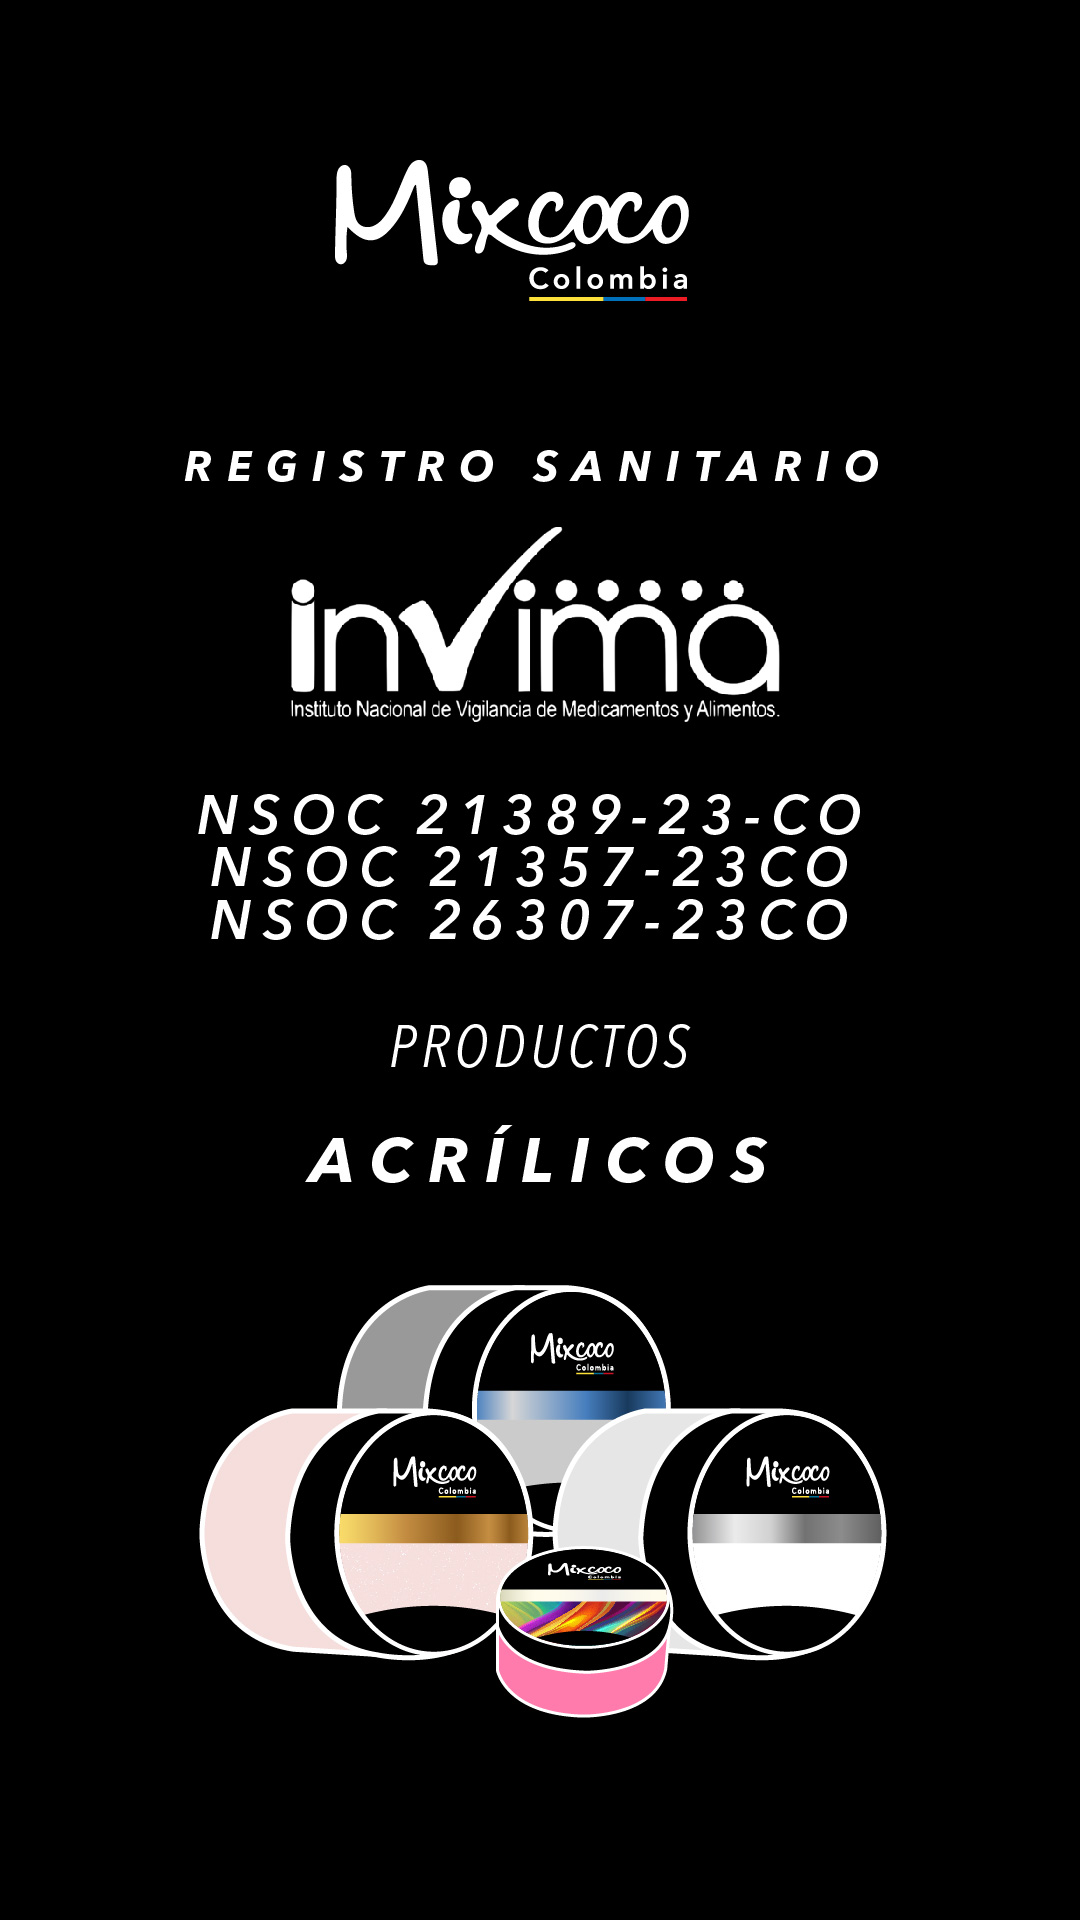 INVIMA_ACRILICOS-MIXCOCO